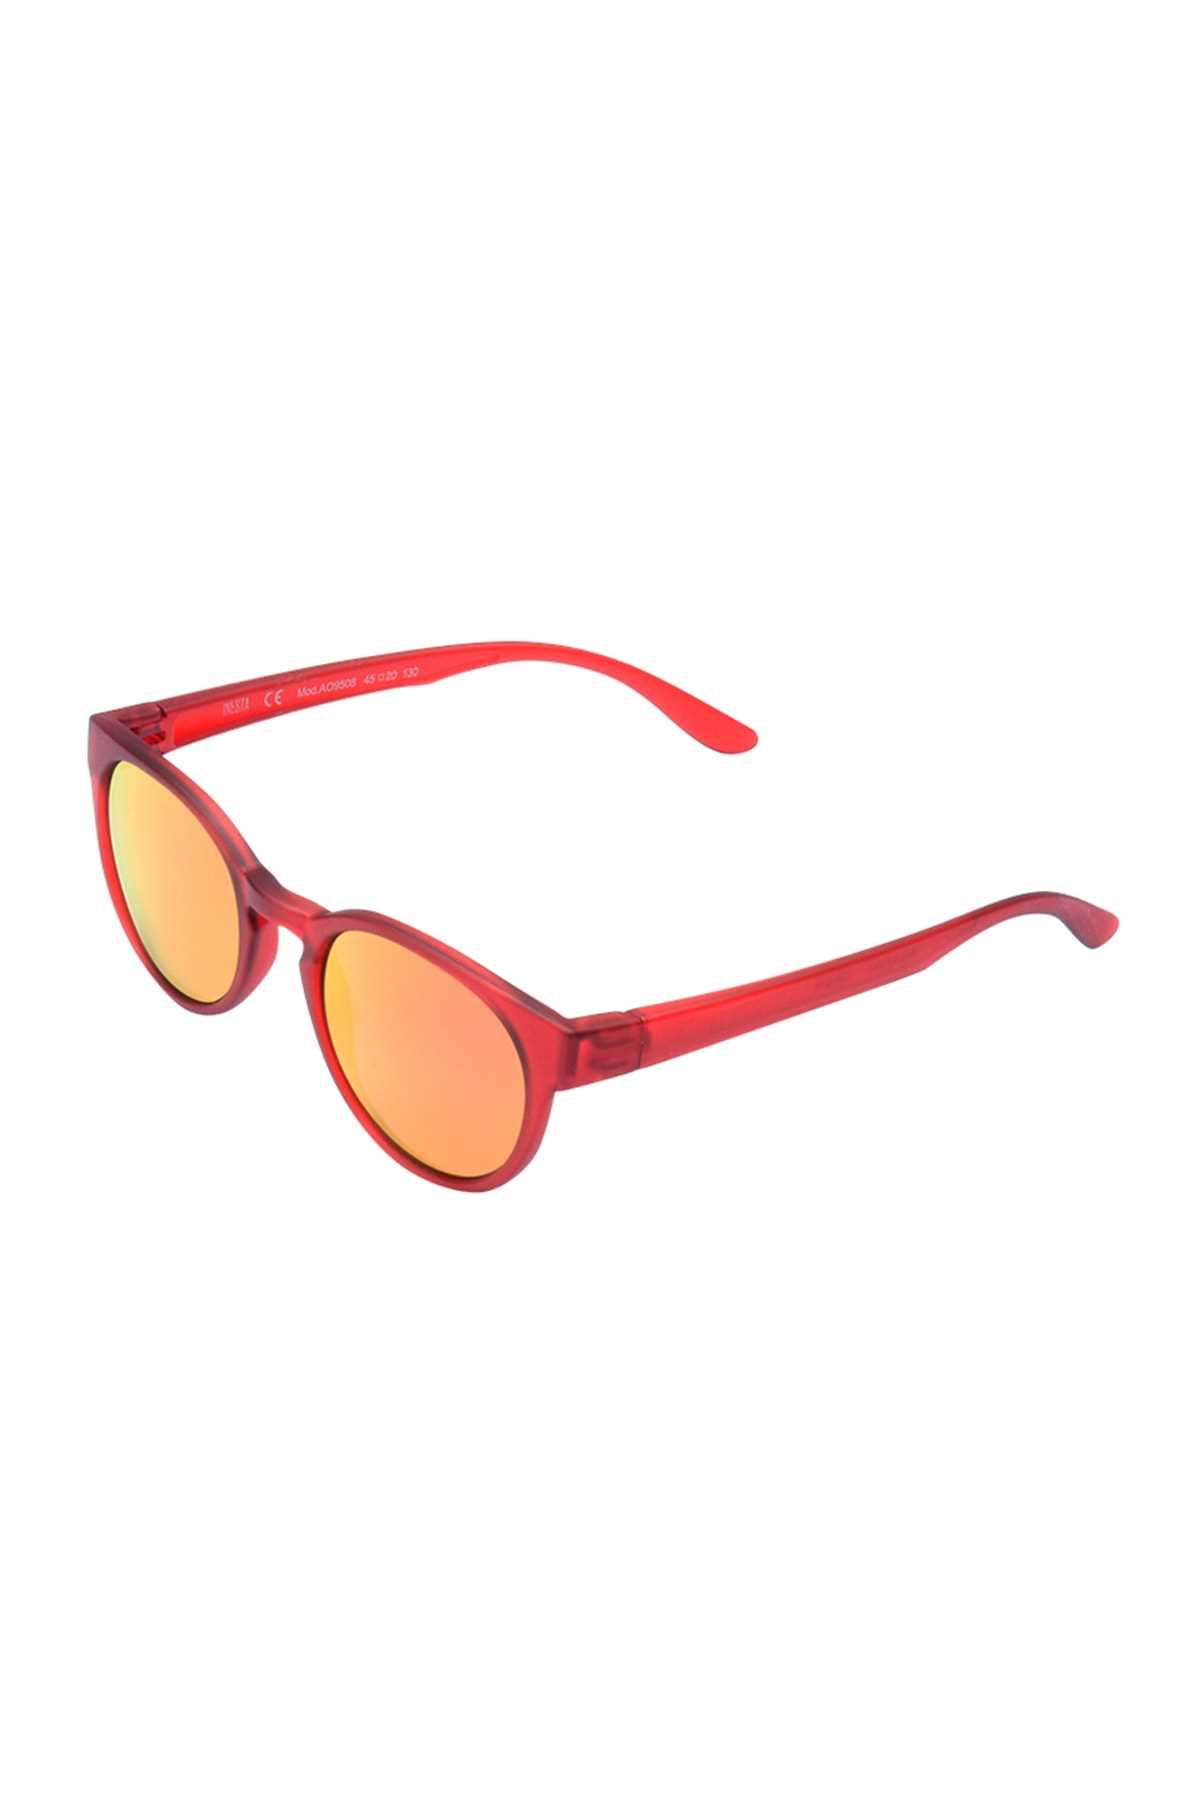 عینک آفتابی پسرانه قیمت مناسب برند INESTA KIDS رنگ بژ کد ty33199259